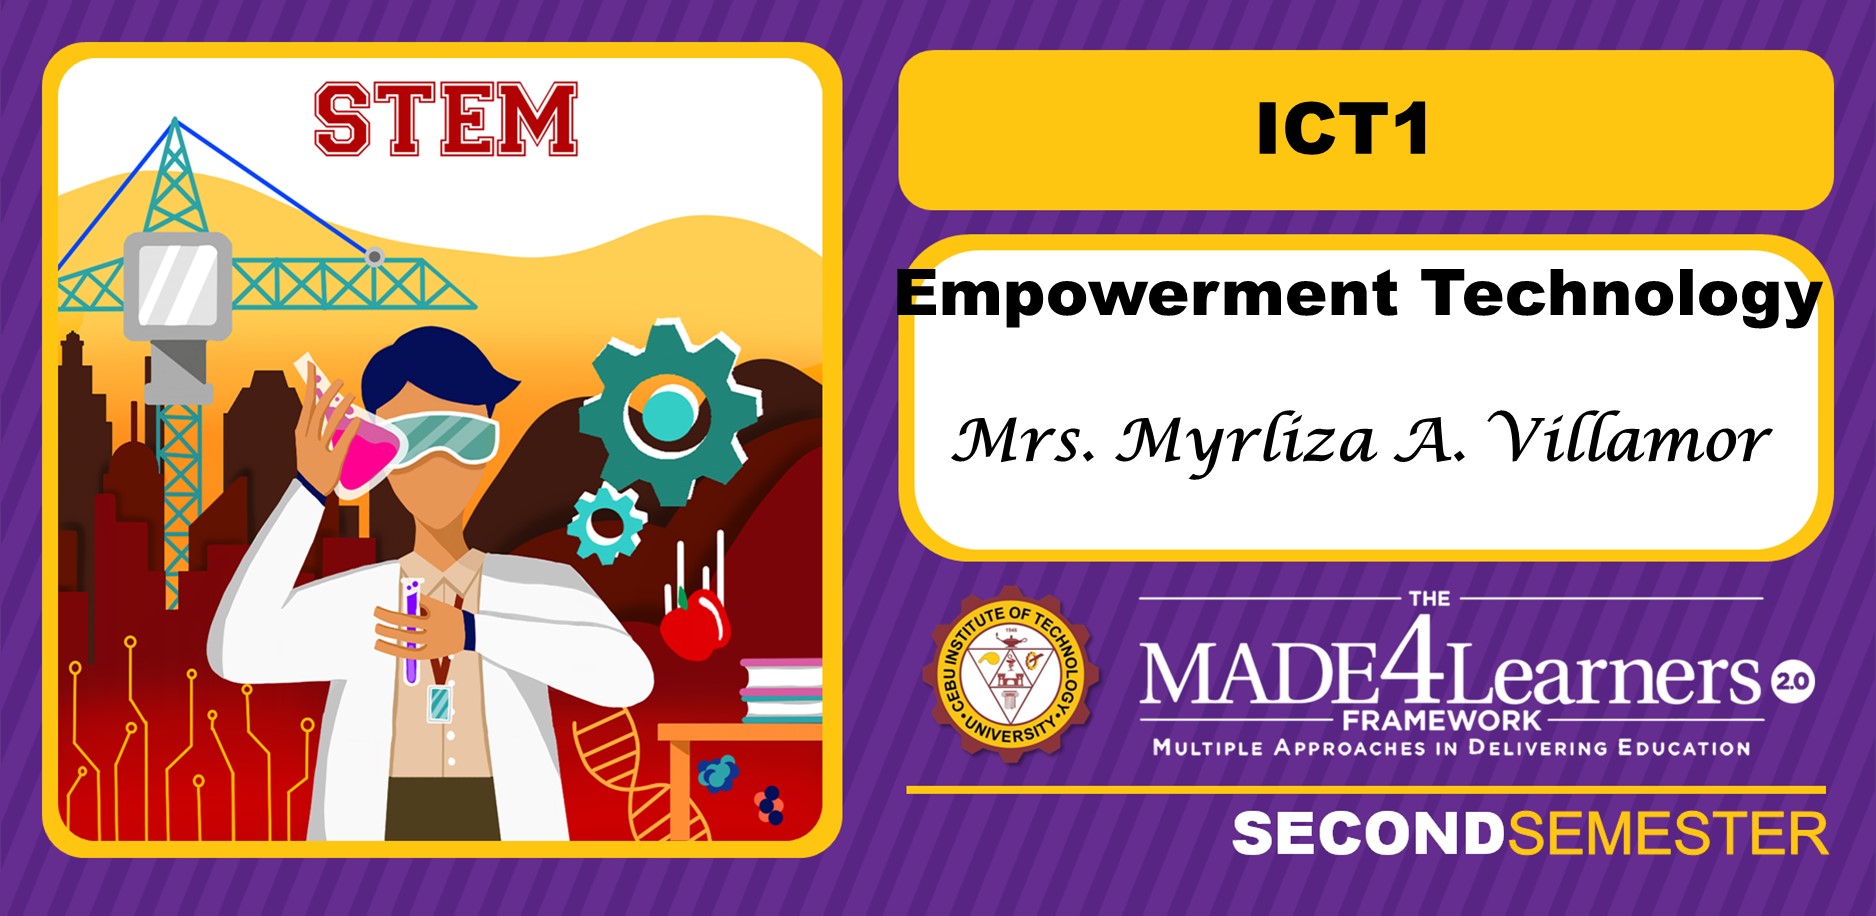 ICT1: Empowerment Technology - Villamor